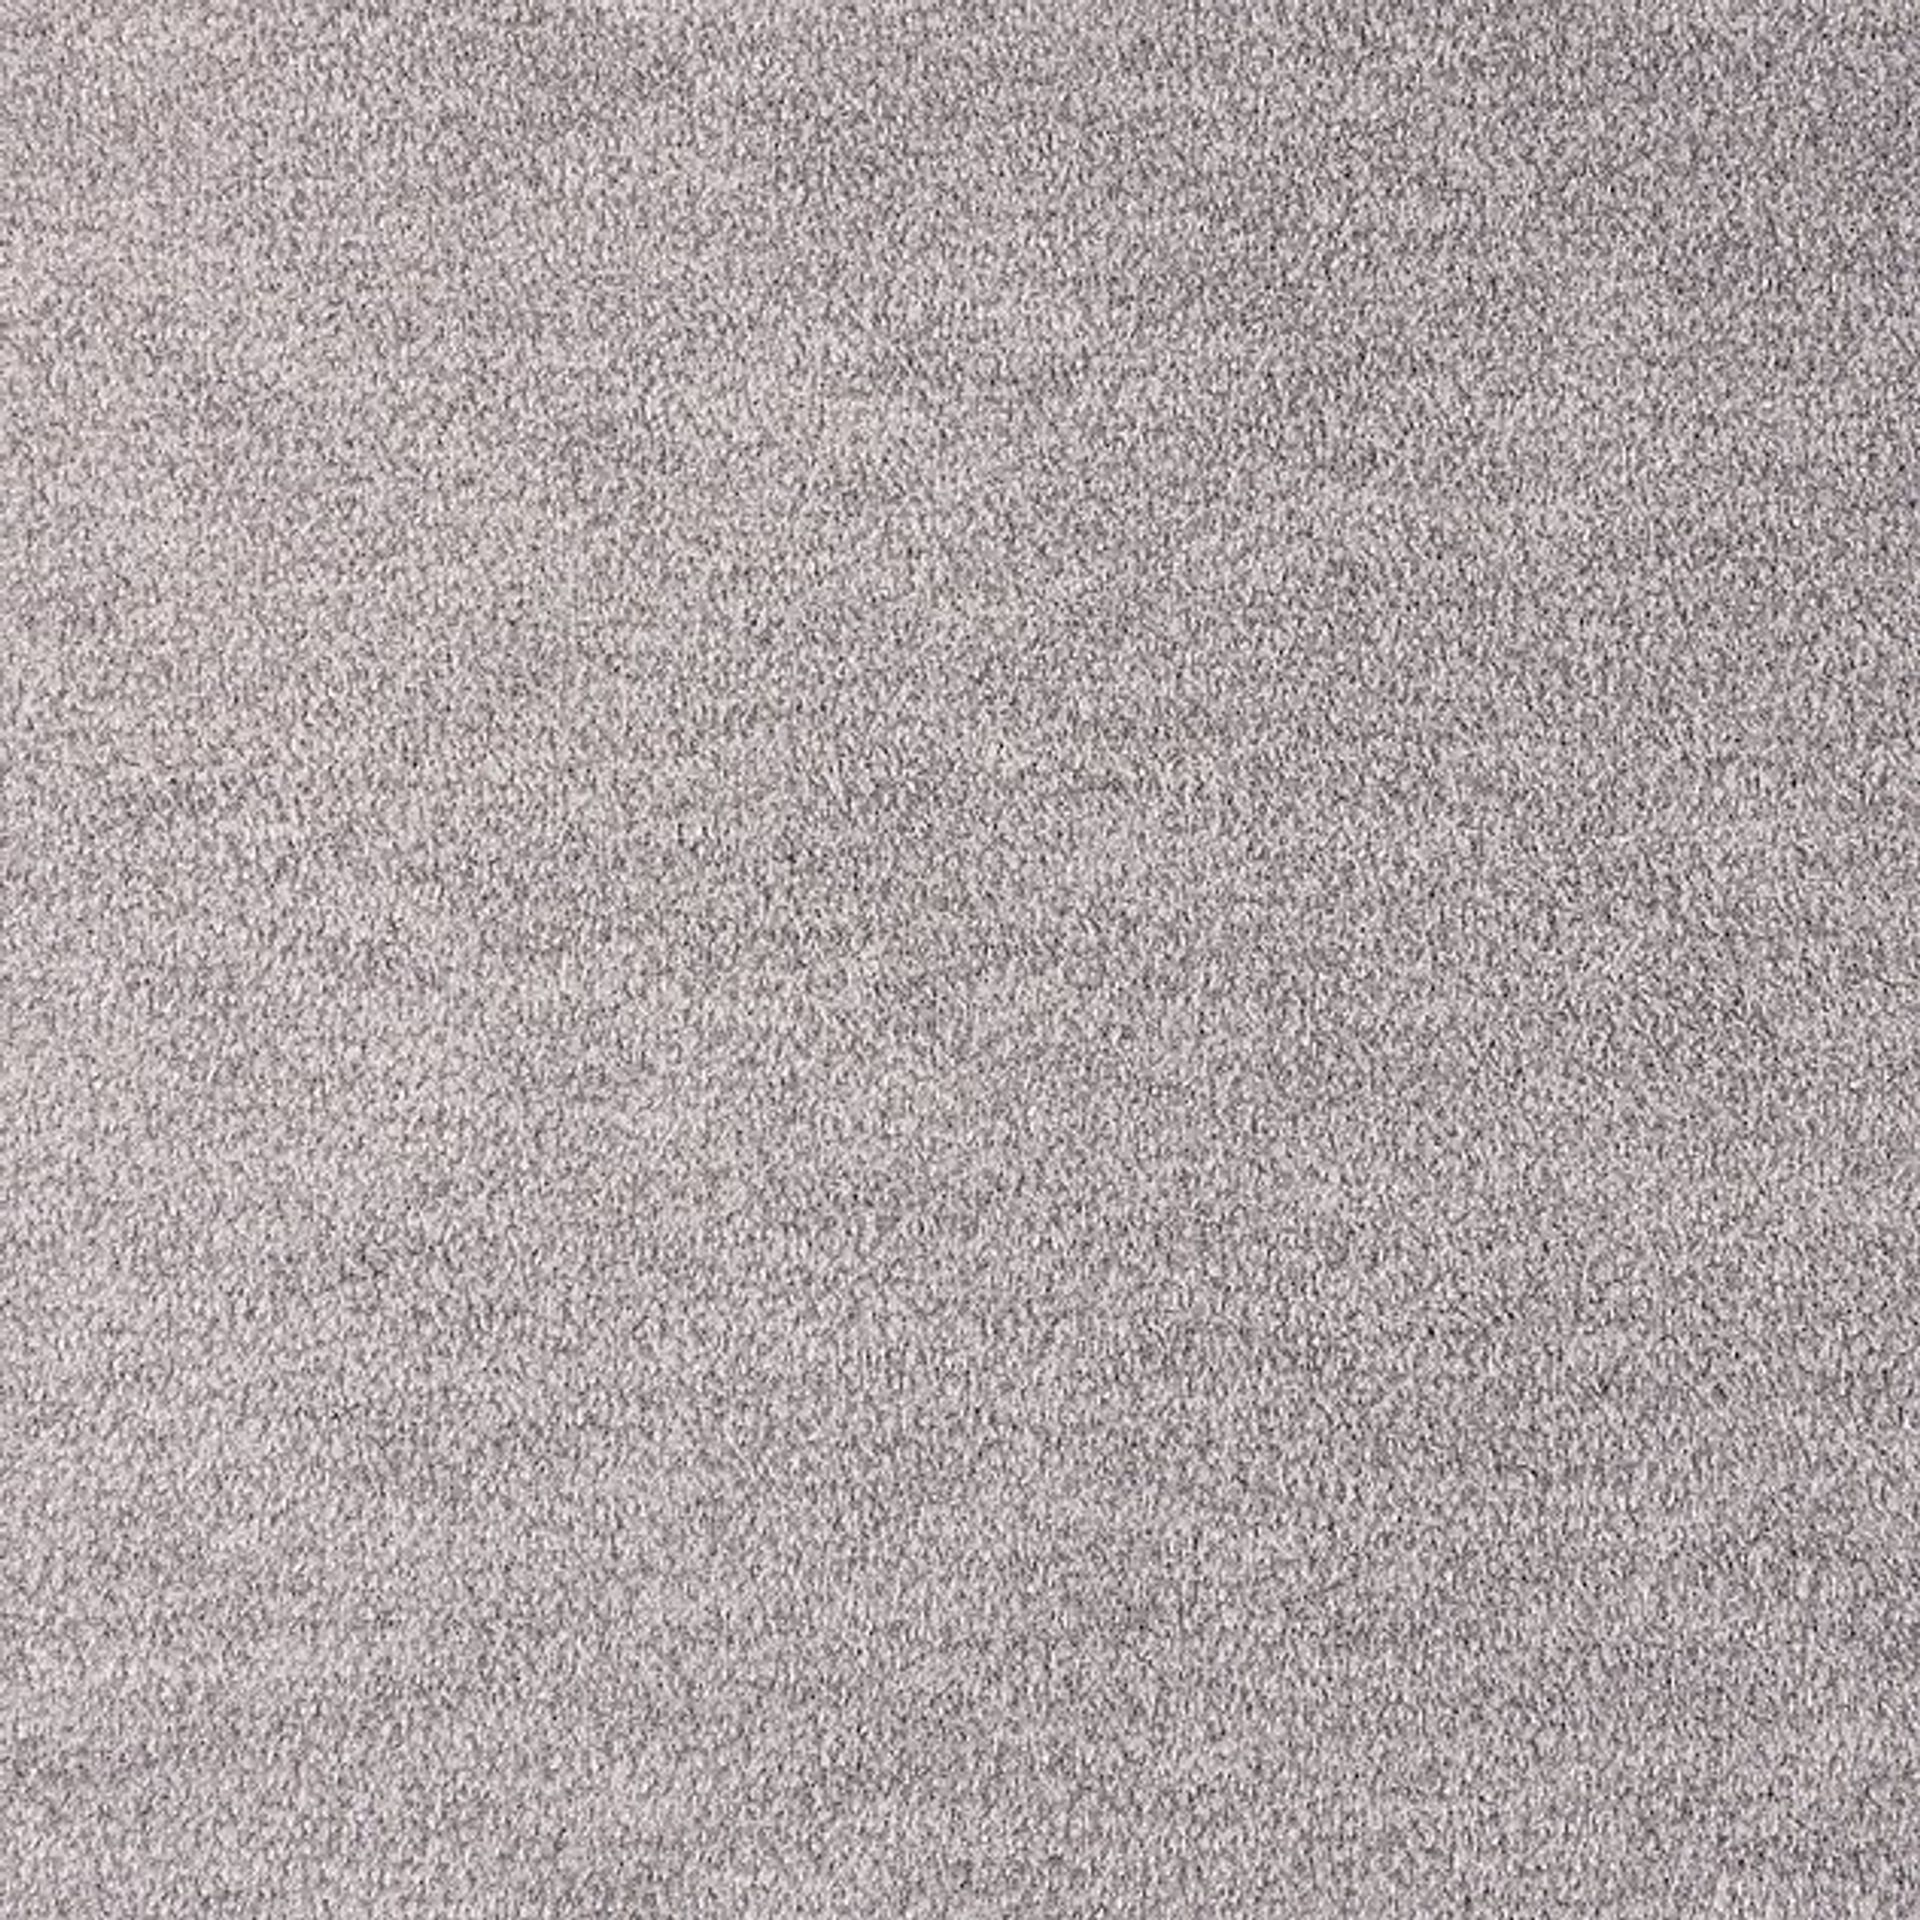 Teppichboden Infloor-Girloon Charme Velours Grau 520 meliert - Rollenbreite 400 cm